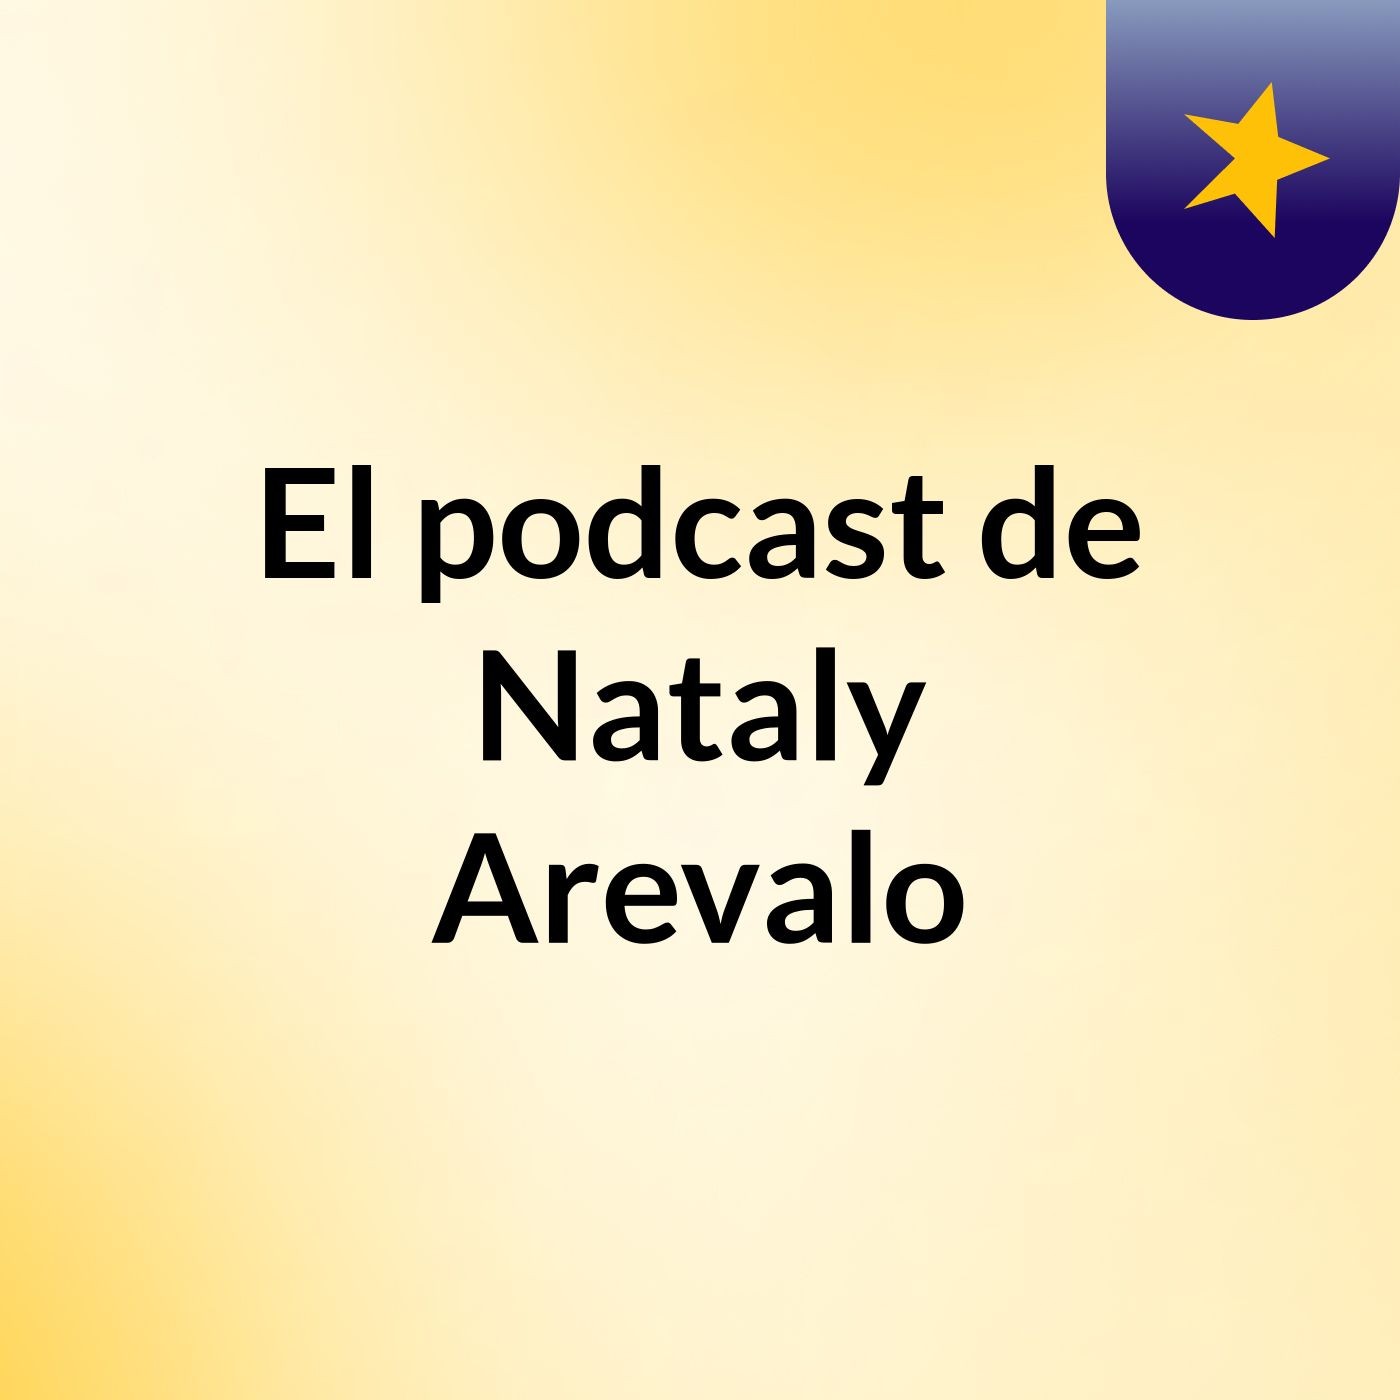 El podcast de Nataly Arevalo